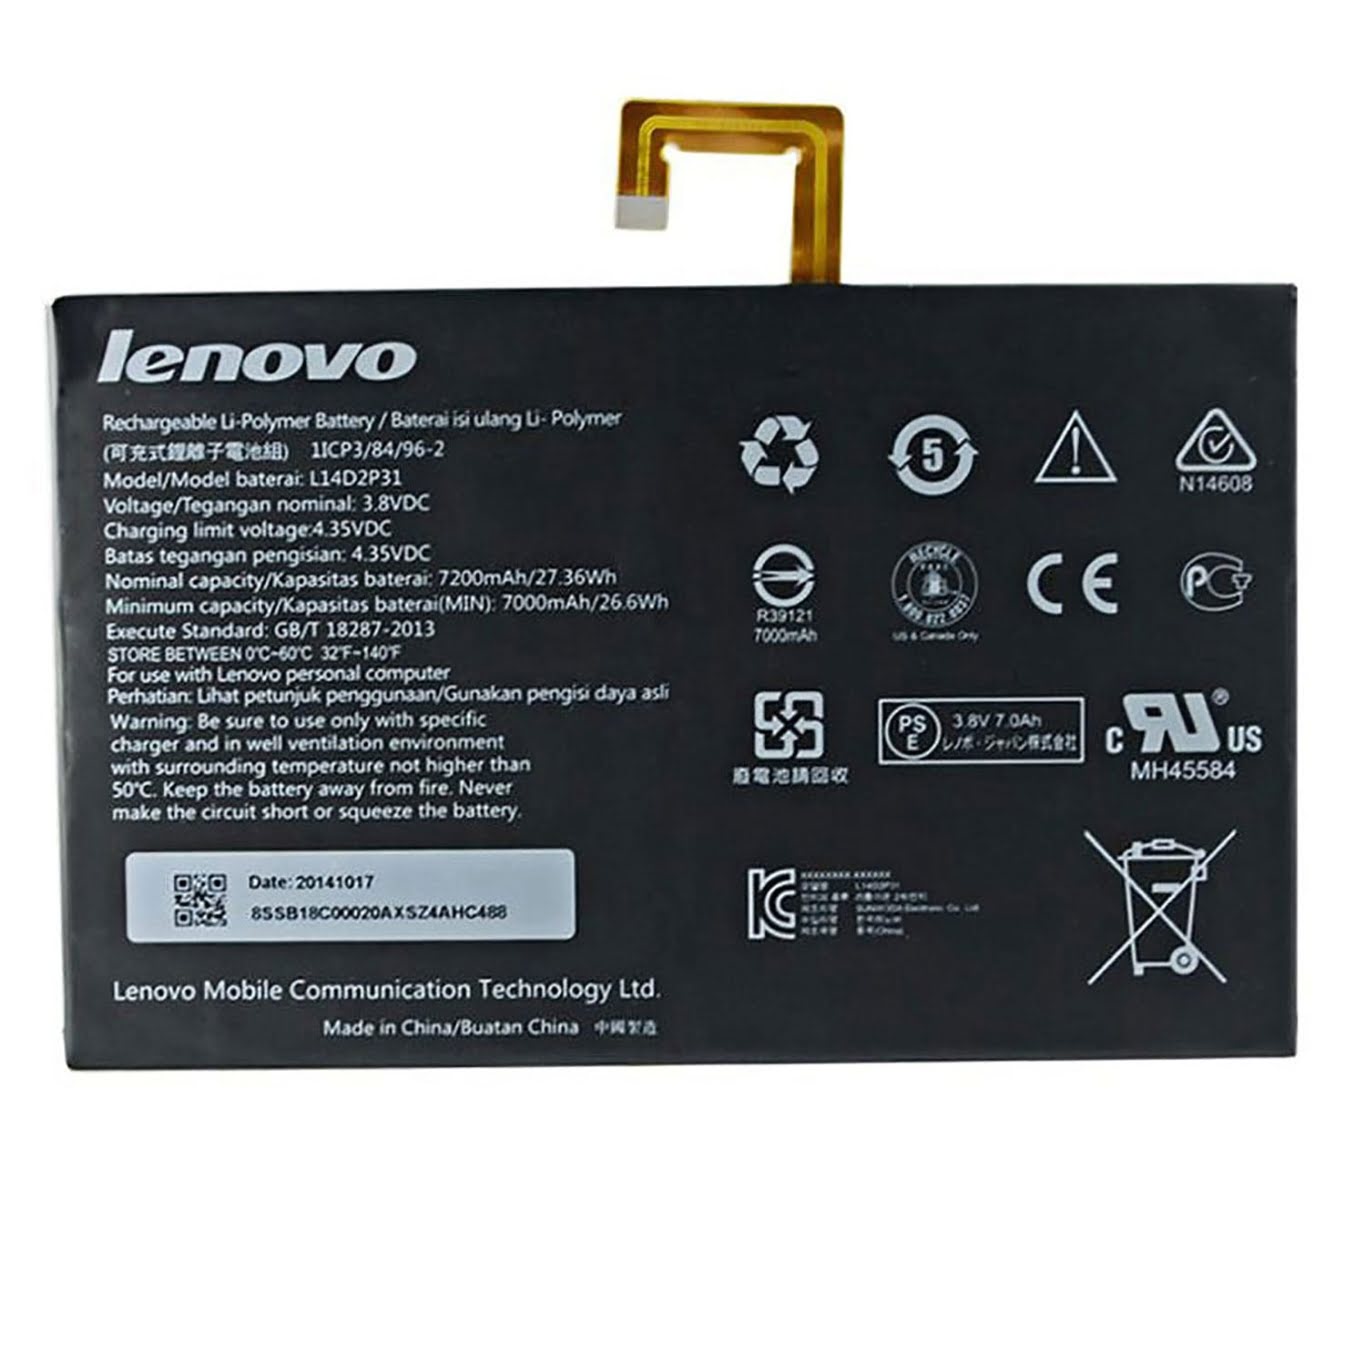 L14D2P31, SB18C03763 ersatz Laptop Akku fuer Lenovo 1ICP3/84/96-2, A10-70F, 7000mAh / 26,60Wh, 3,8V